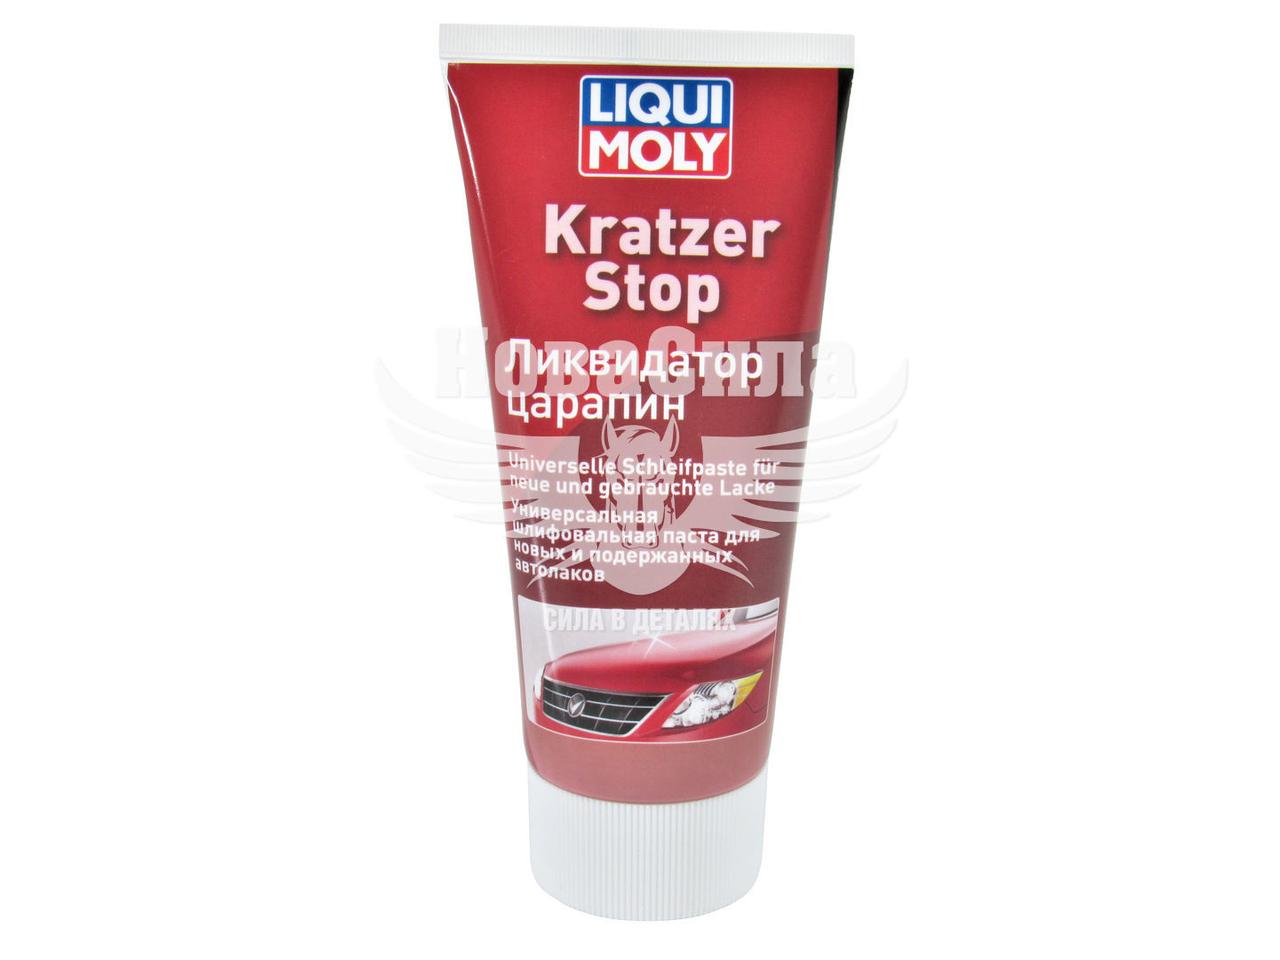 Ліквідатор подряпин (Liqui Moly) Kratzer Stop 0,2кг.   2320